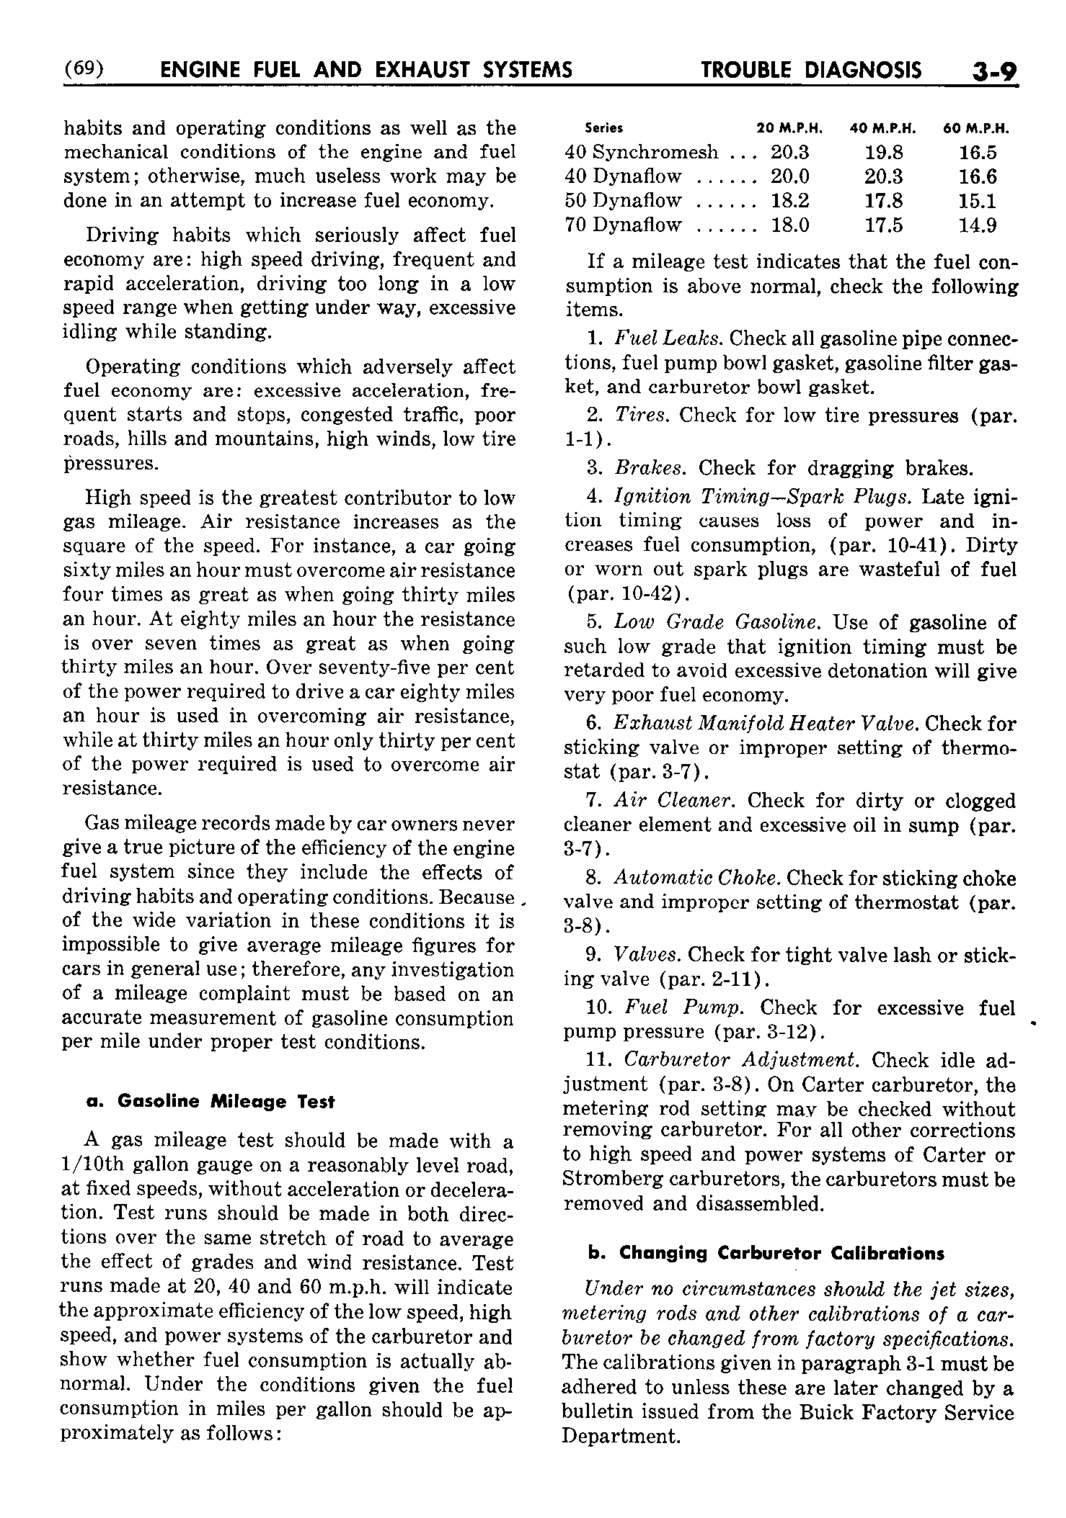 n_04 1953 Buick Shop Manual - Engine Fuel & Exhaust-009-009.jpg